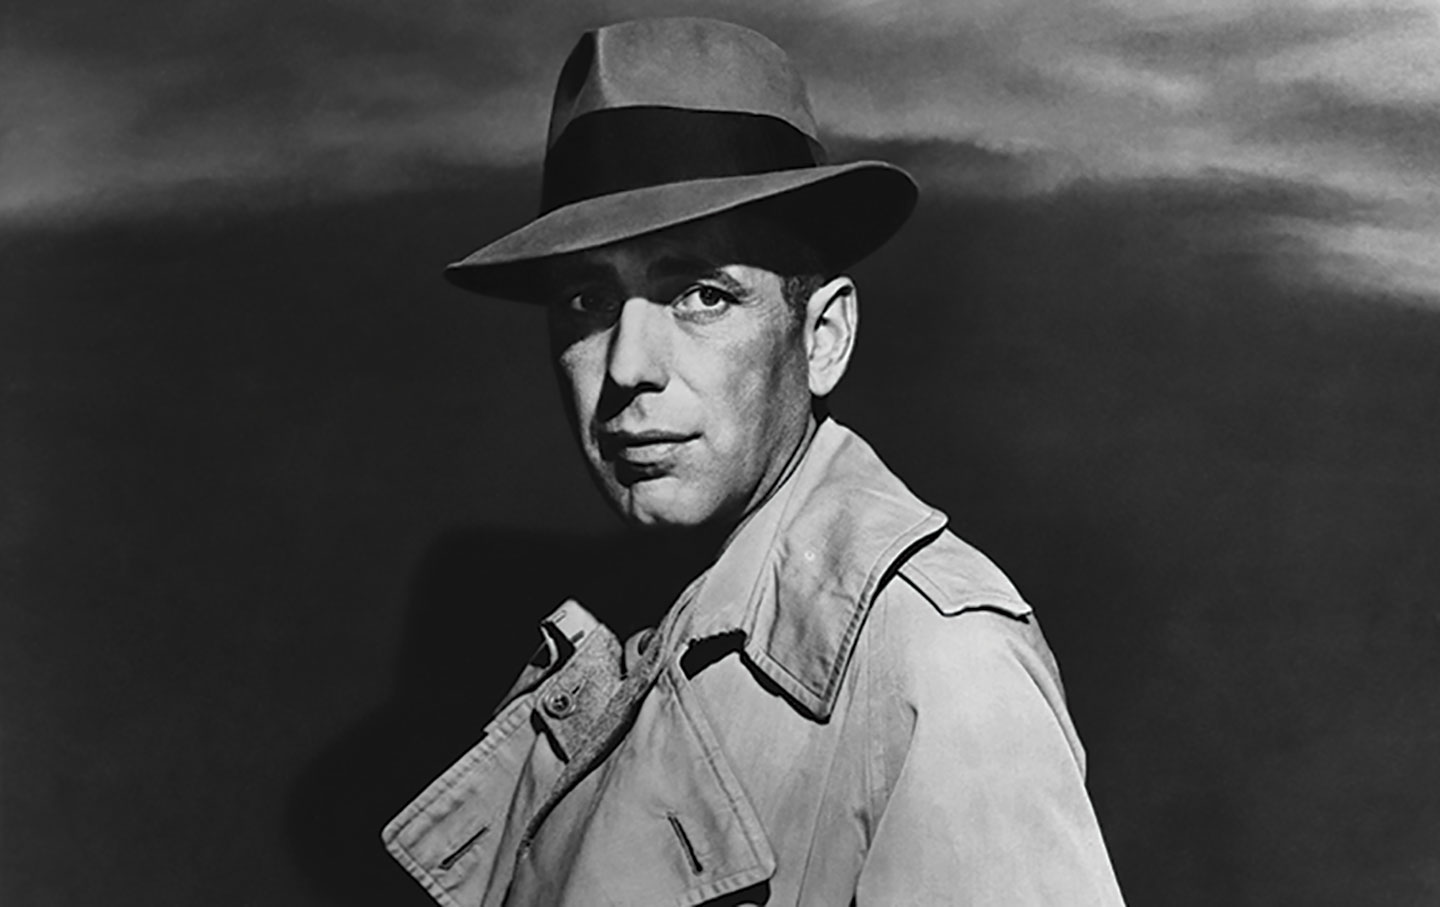 Humphrey Bogart in “Casablanca”